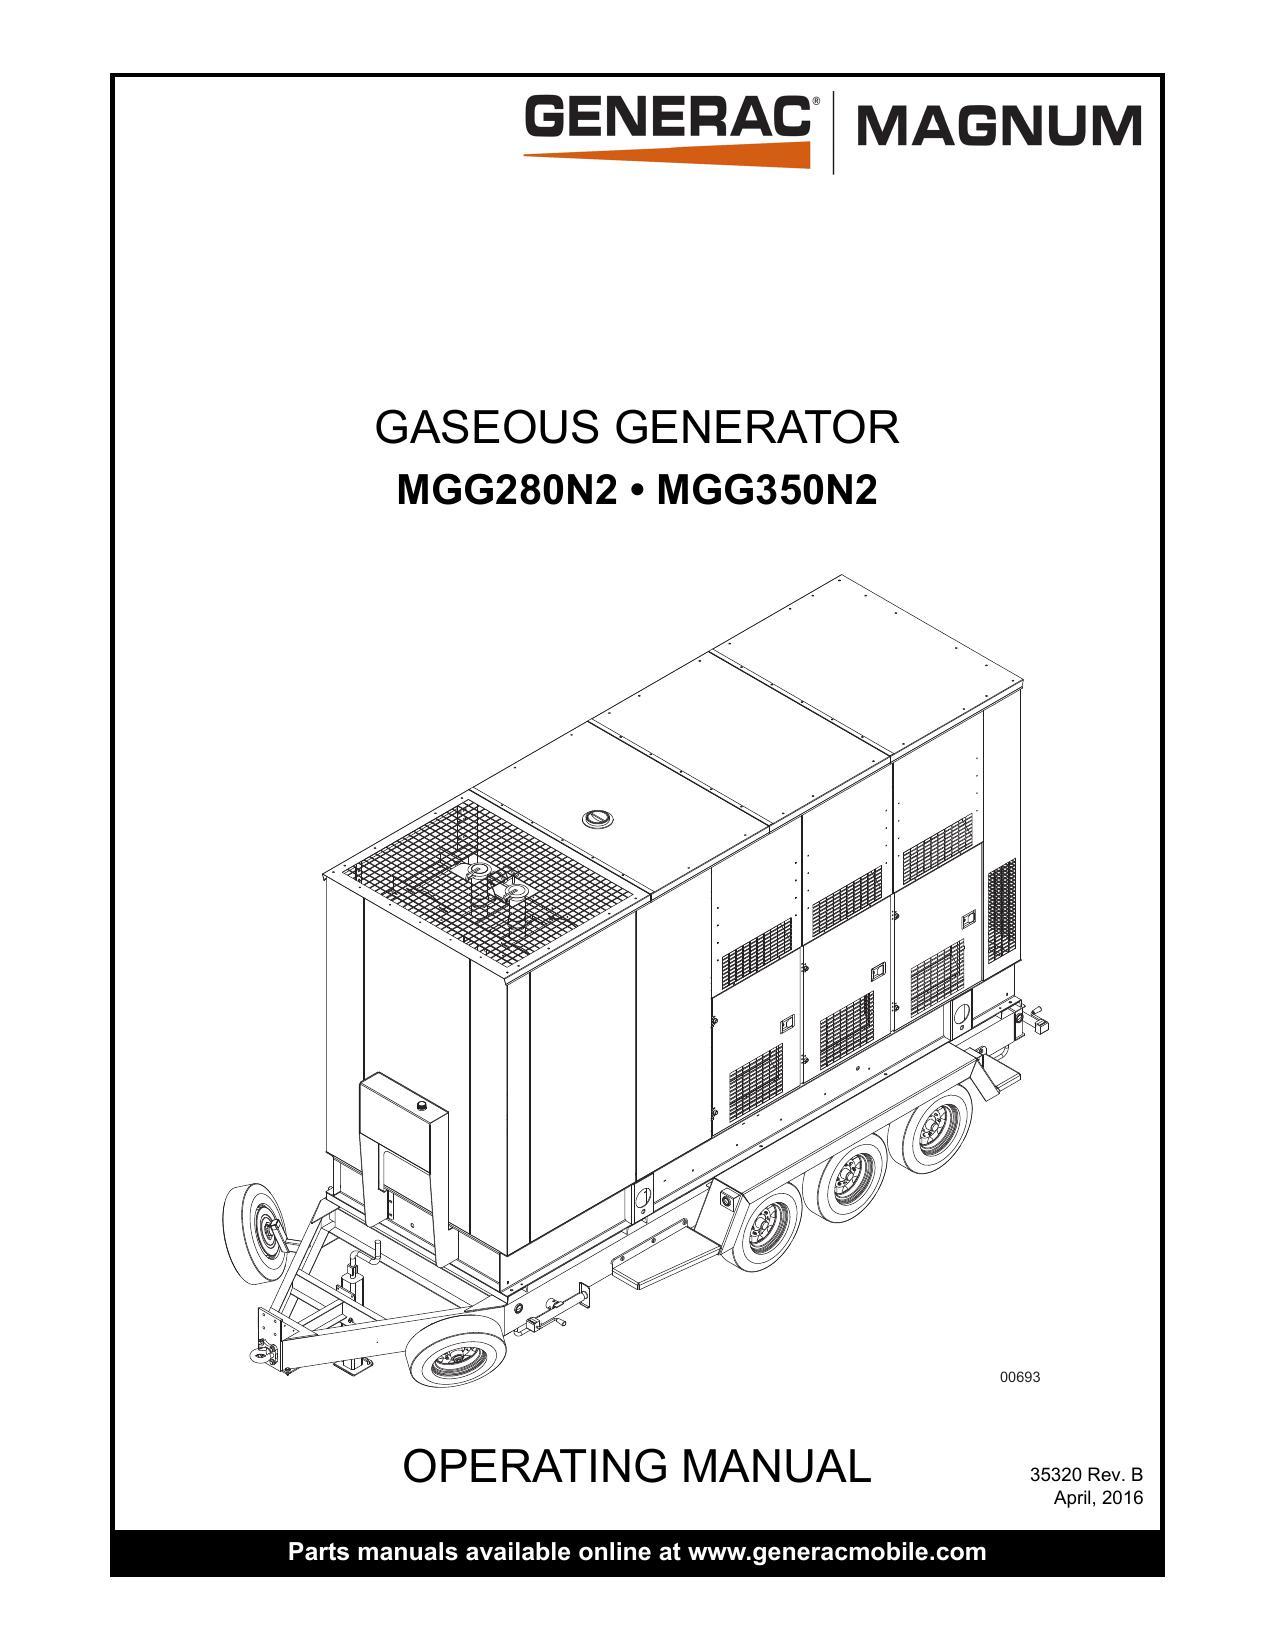 generac-magnum-gaseous-generator-mgg28onz-mgg3s0nz-operating-manual.pdf